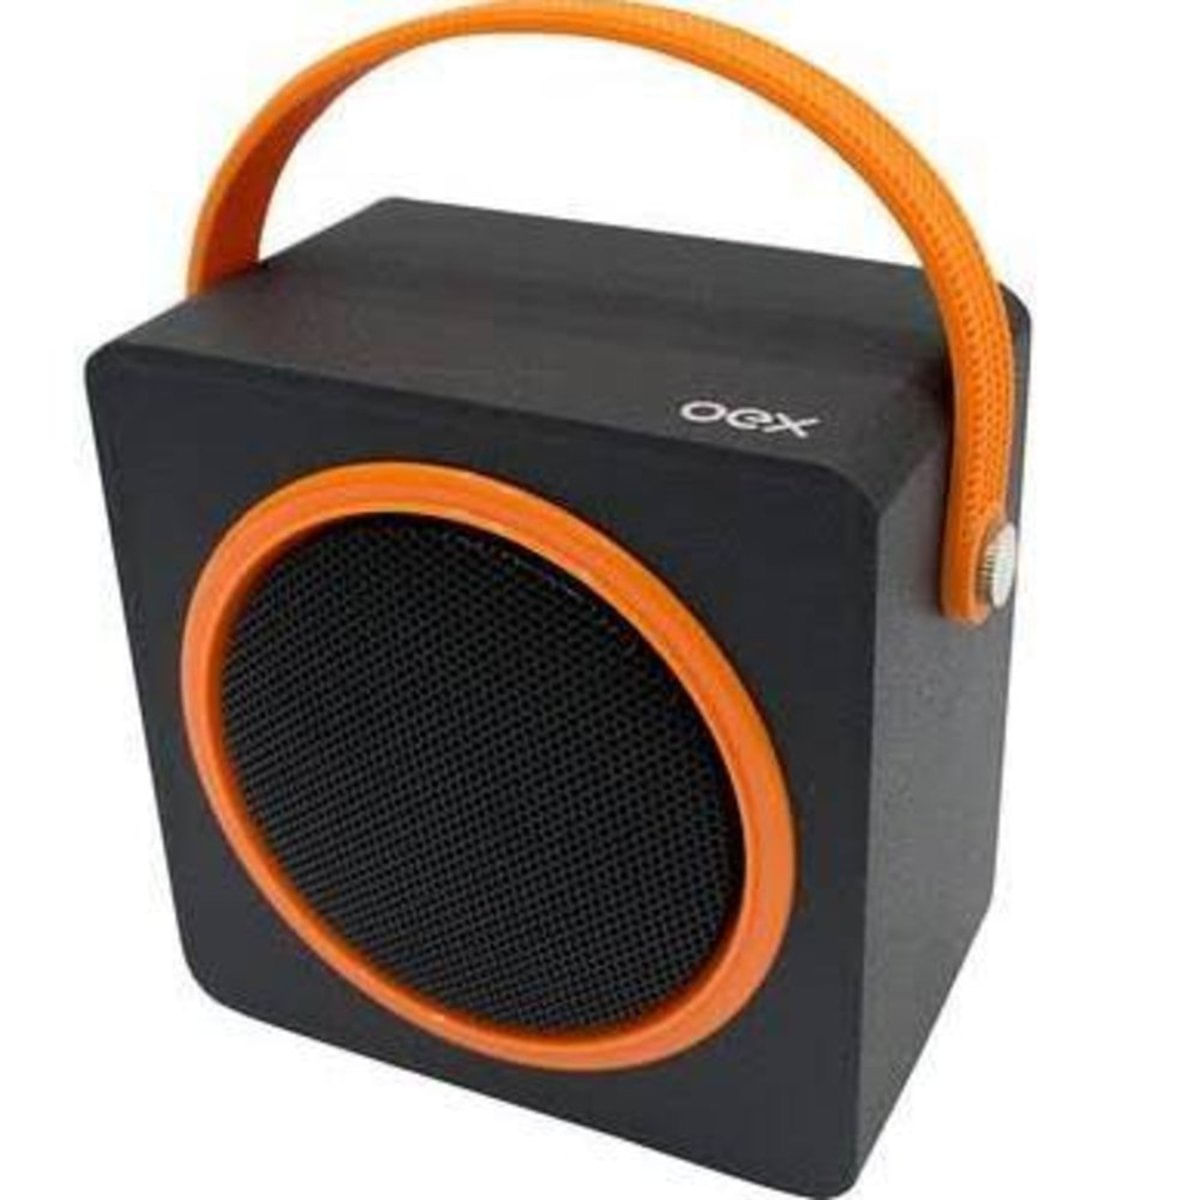 Menor preço em Caixa De Som Speaker Box Sk404 Bluetooth 10w Oex Laranja